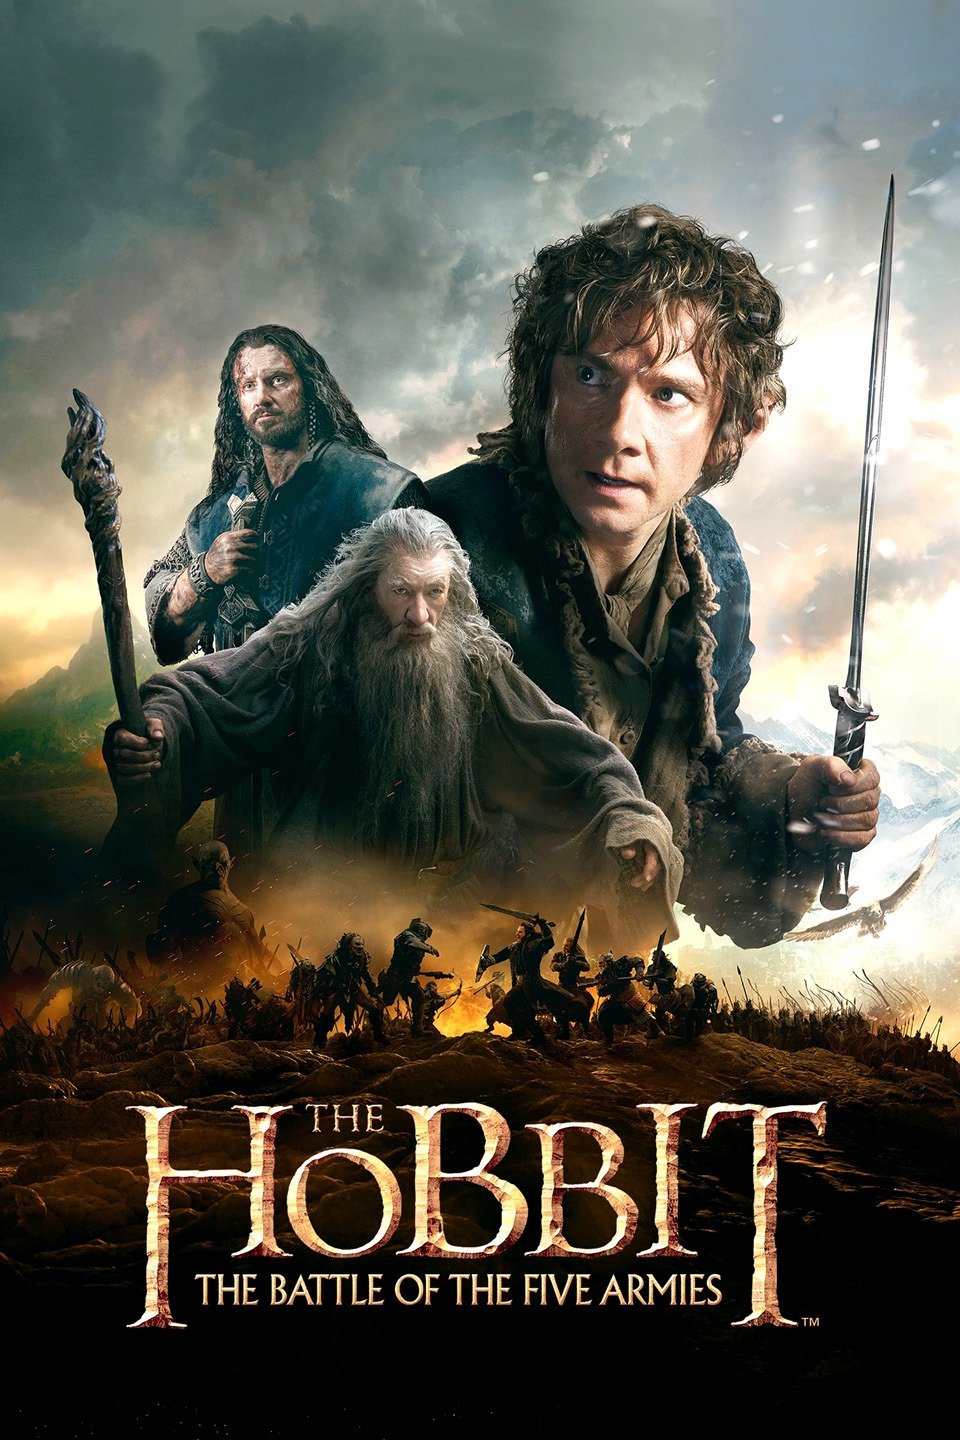 [MINI Super-HQ] The Hobbit: The Battle of the Five Armies (2014) เดอะ ฮอบบิท 3: สงคราม 5 ทัพ [Extended Edition] [1080p] [พากย์ไทย 5.1 + อังกฤษ DTS] [บรรยายไทย + อังกฤษ] [ซับไทย + อังกฤษ]